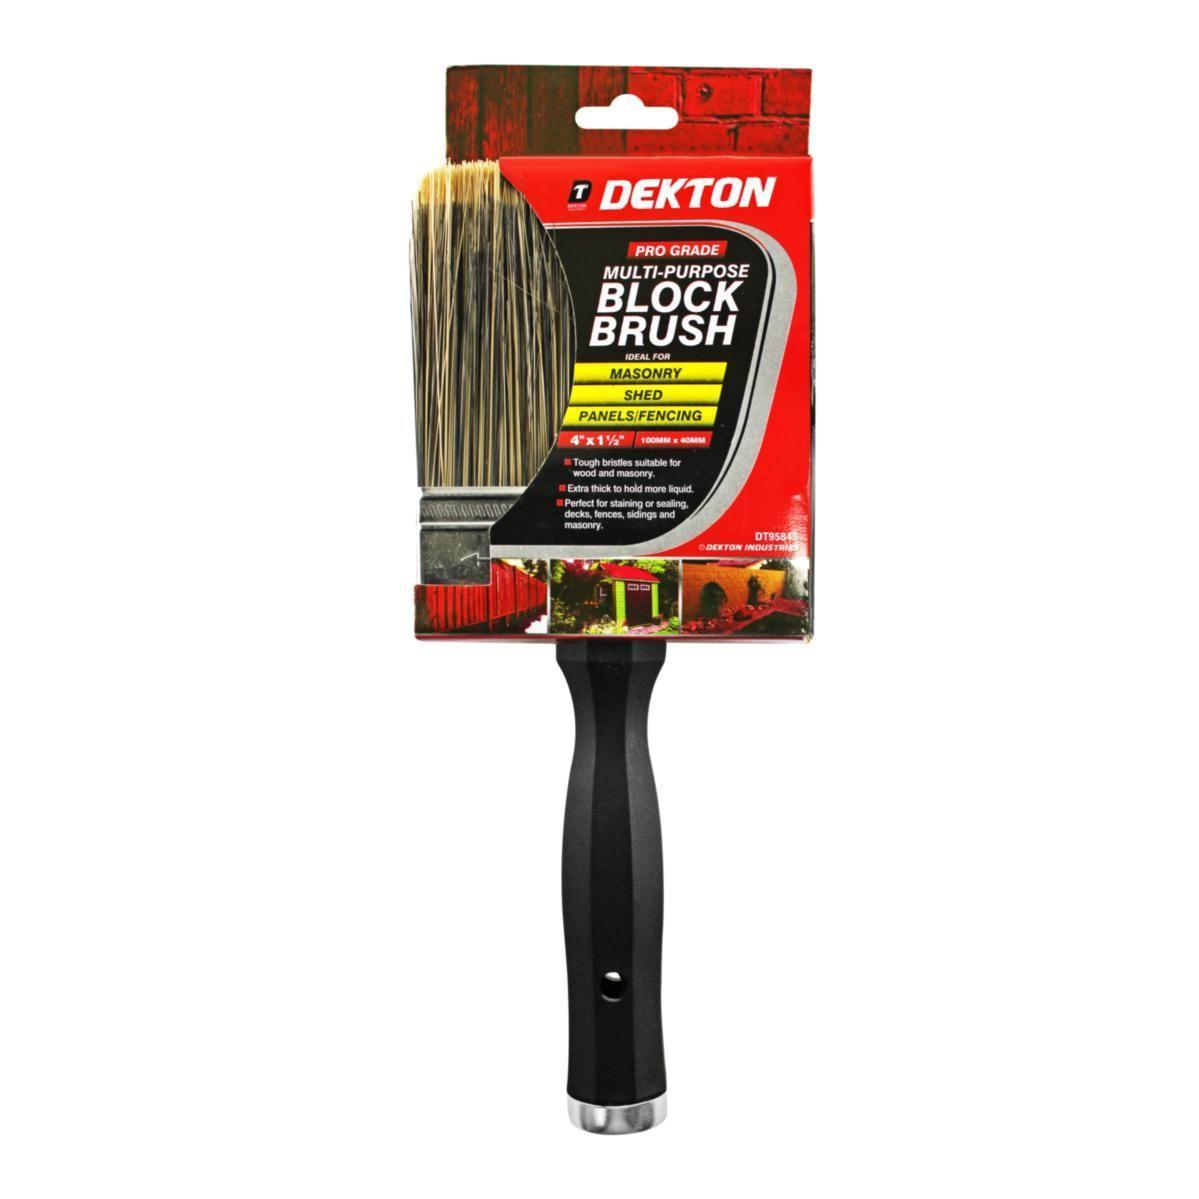 Dekton | Pro Grade Multipurpose Shed & Fence Brush 4" DT95845 - Choice Stores